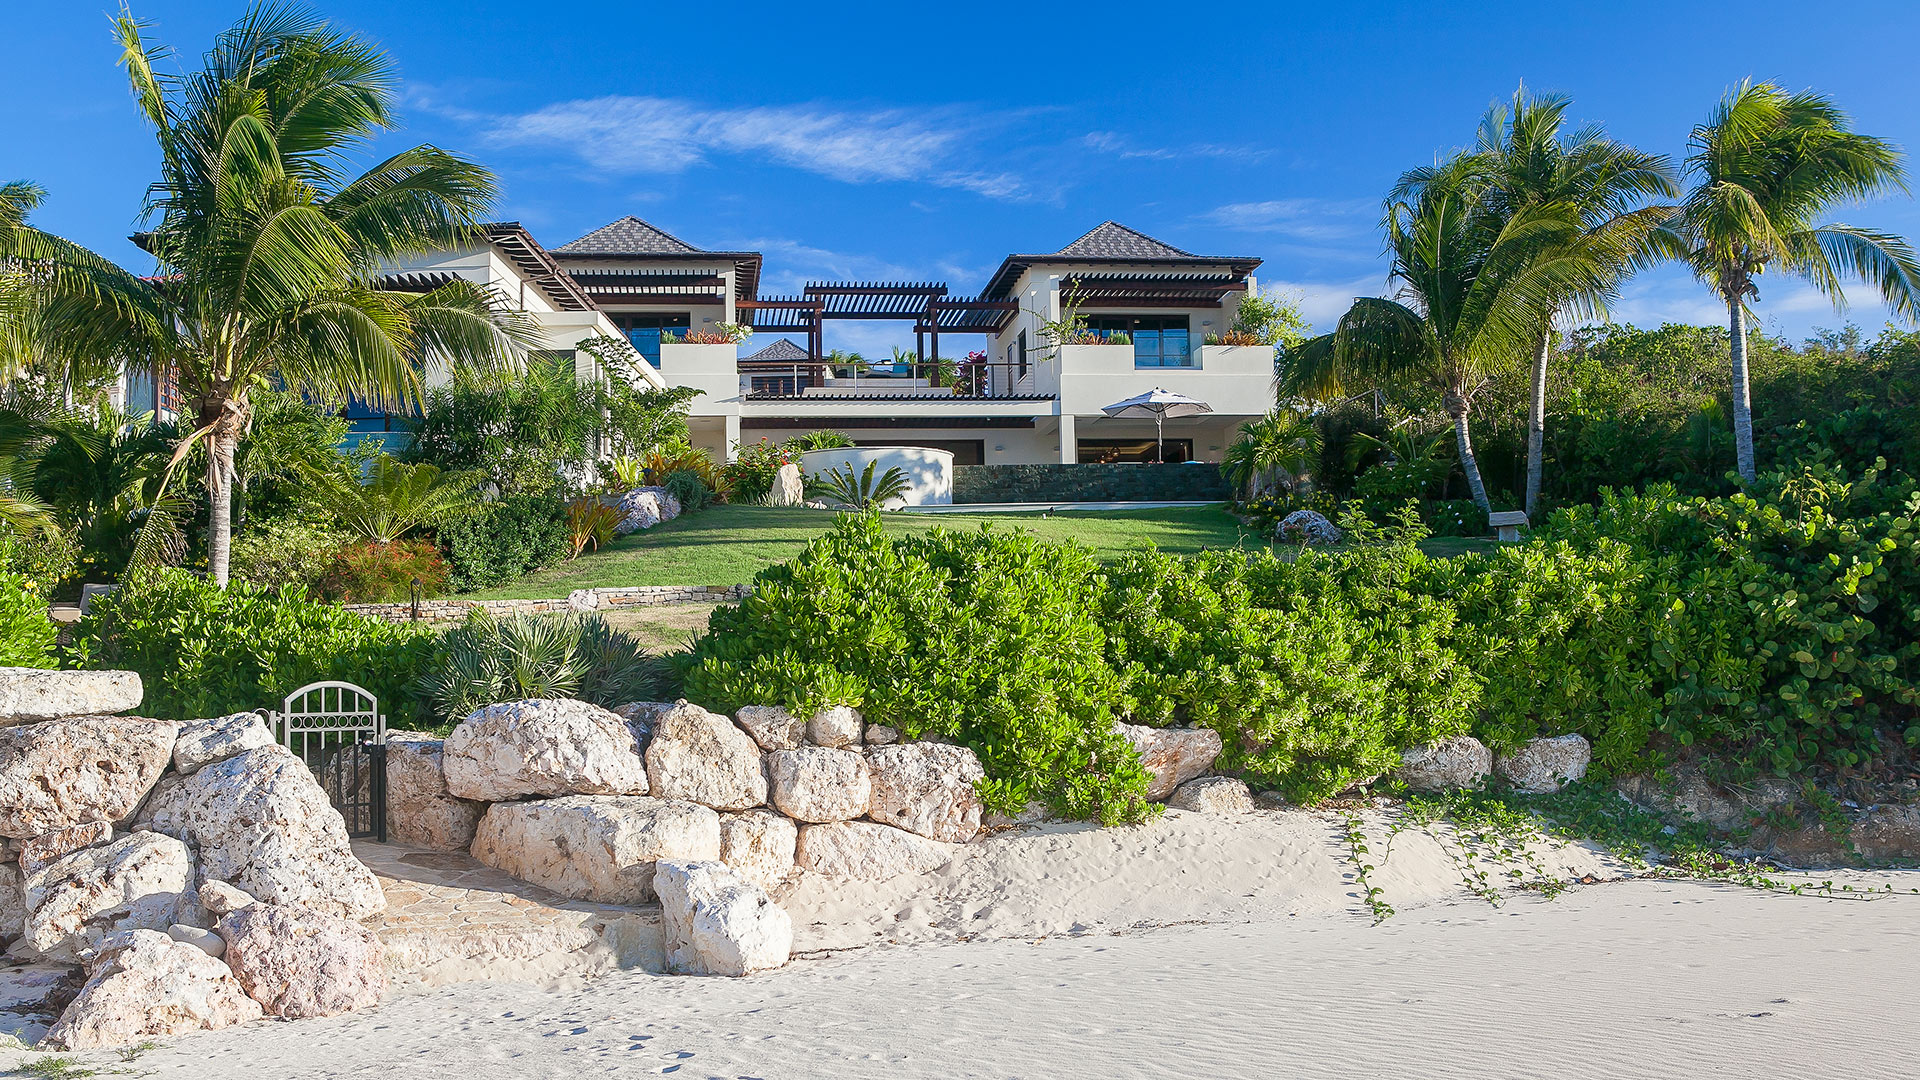 Nevaeh Villa is the epitome of a luxury Caribbean Villa rental